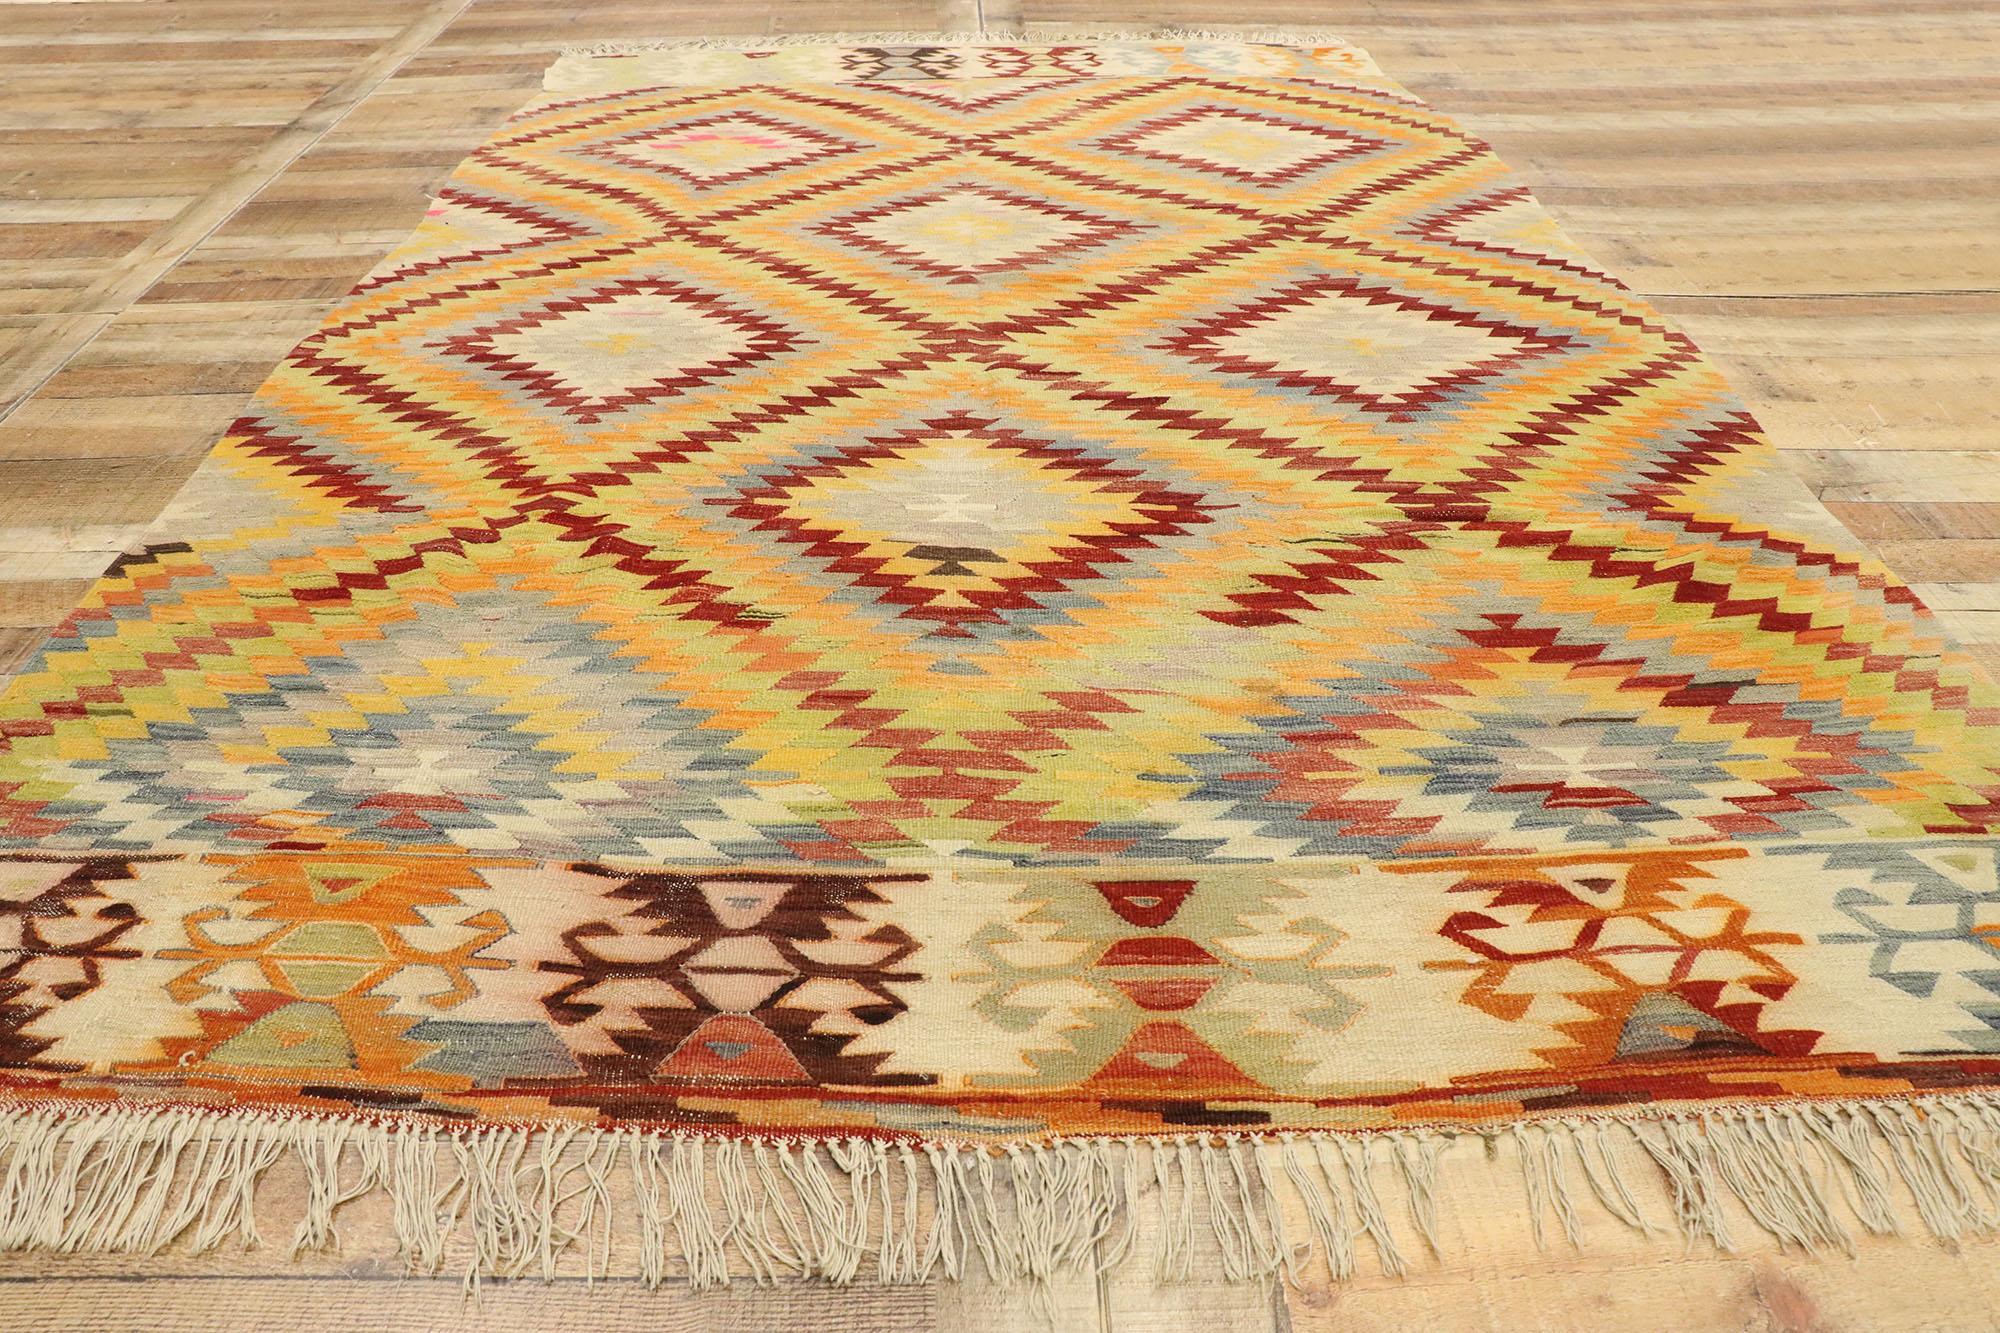 Wool Vintage Turkish Kilim Rug with Southwestern Desert Style